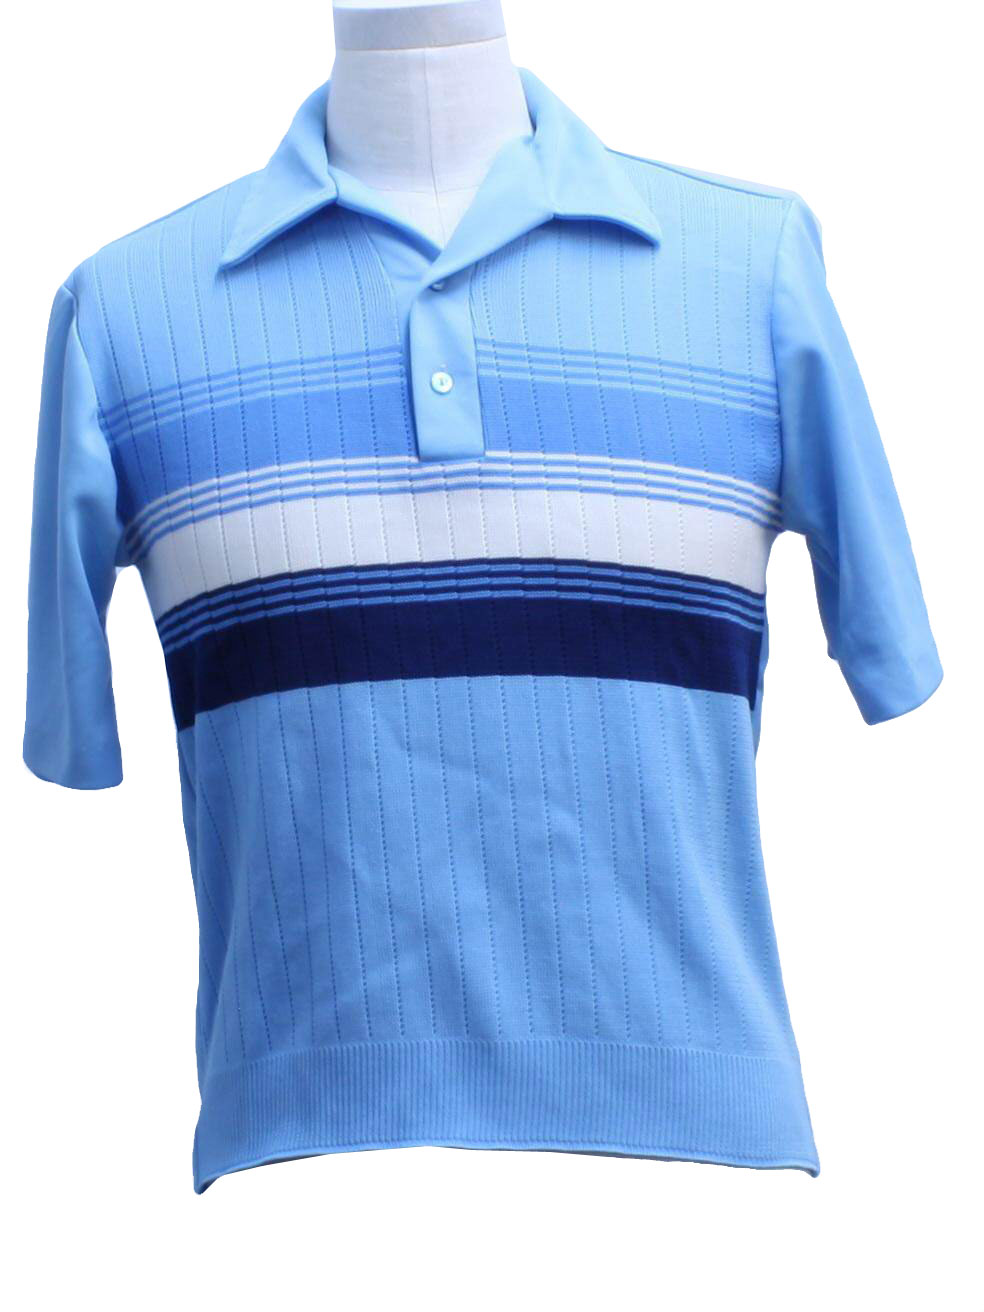 Retro Seventies Knit Shirt: 70s -Sportswear- Mens baby blue, royal blue ...